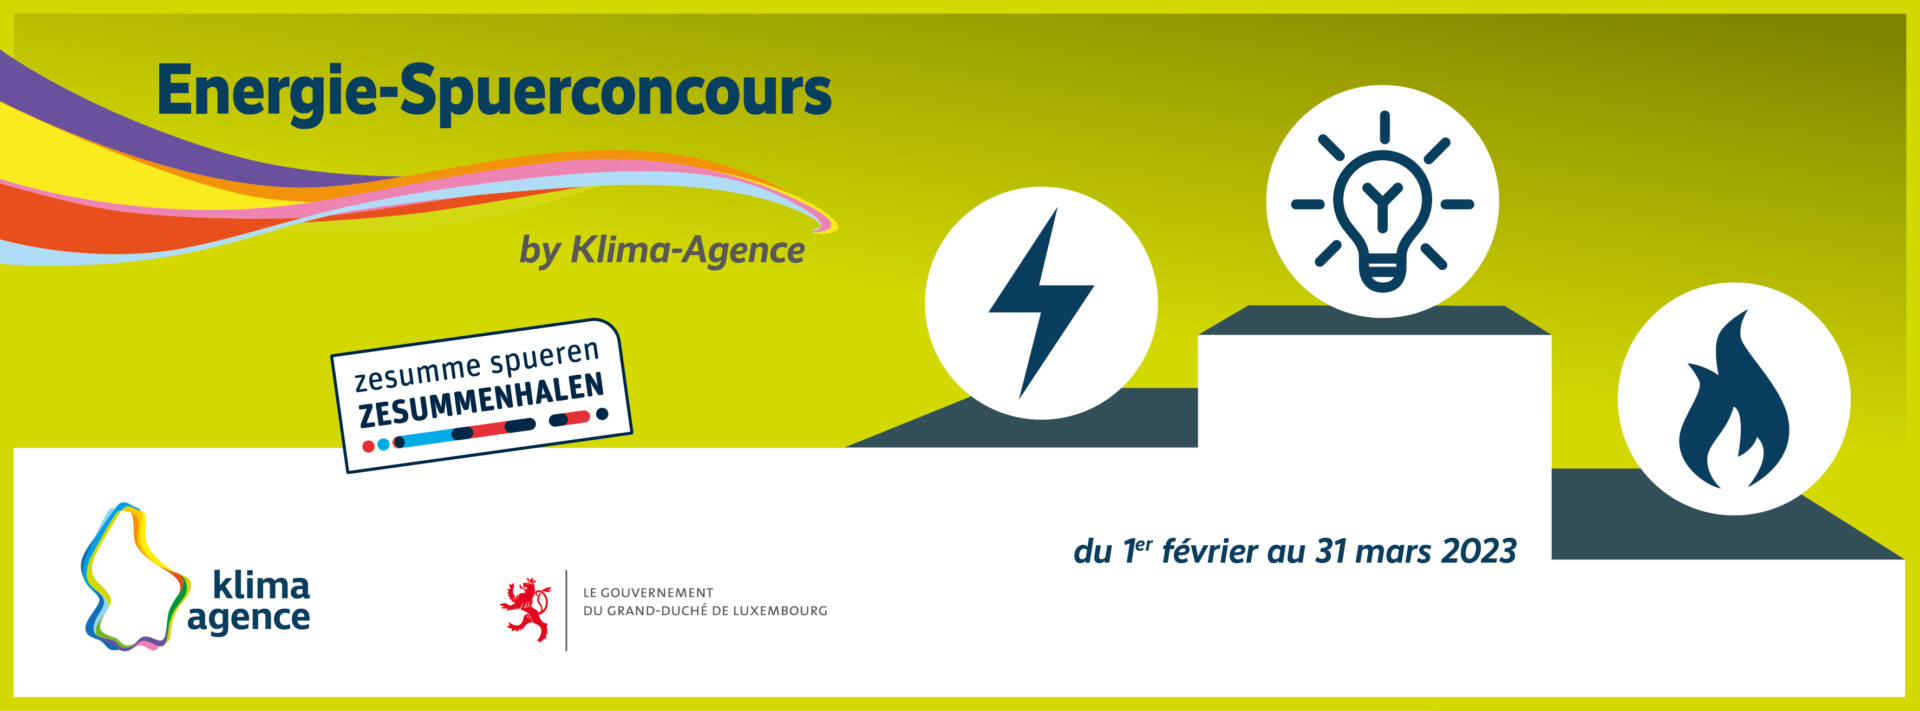 Energie-Spuerconcours 2023 (01.02 - 31.03.2023)